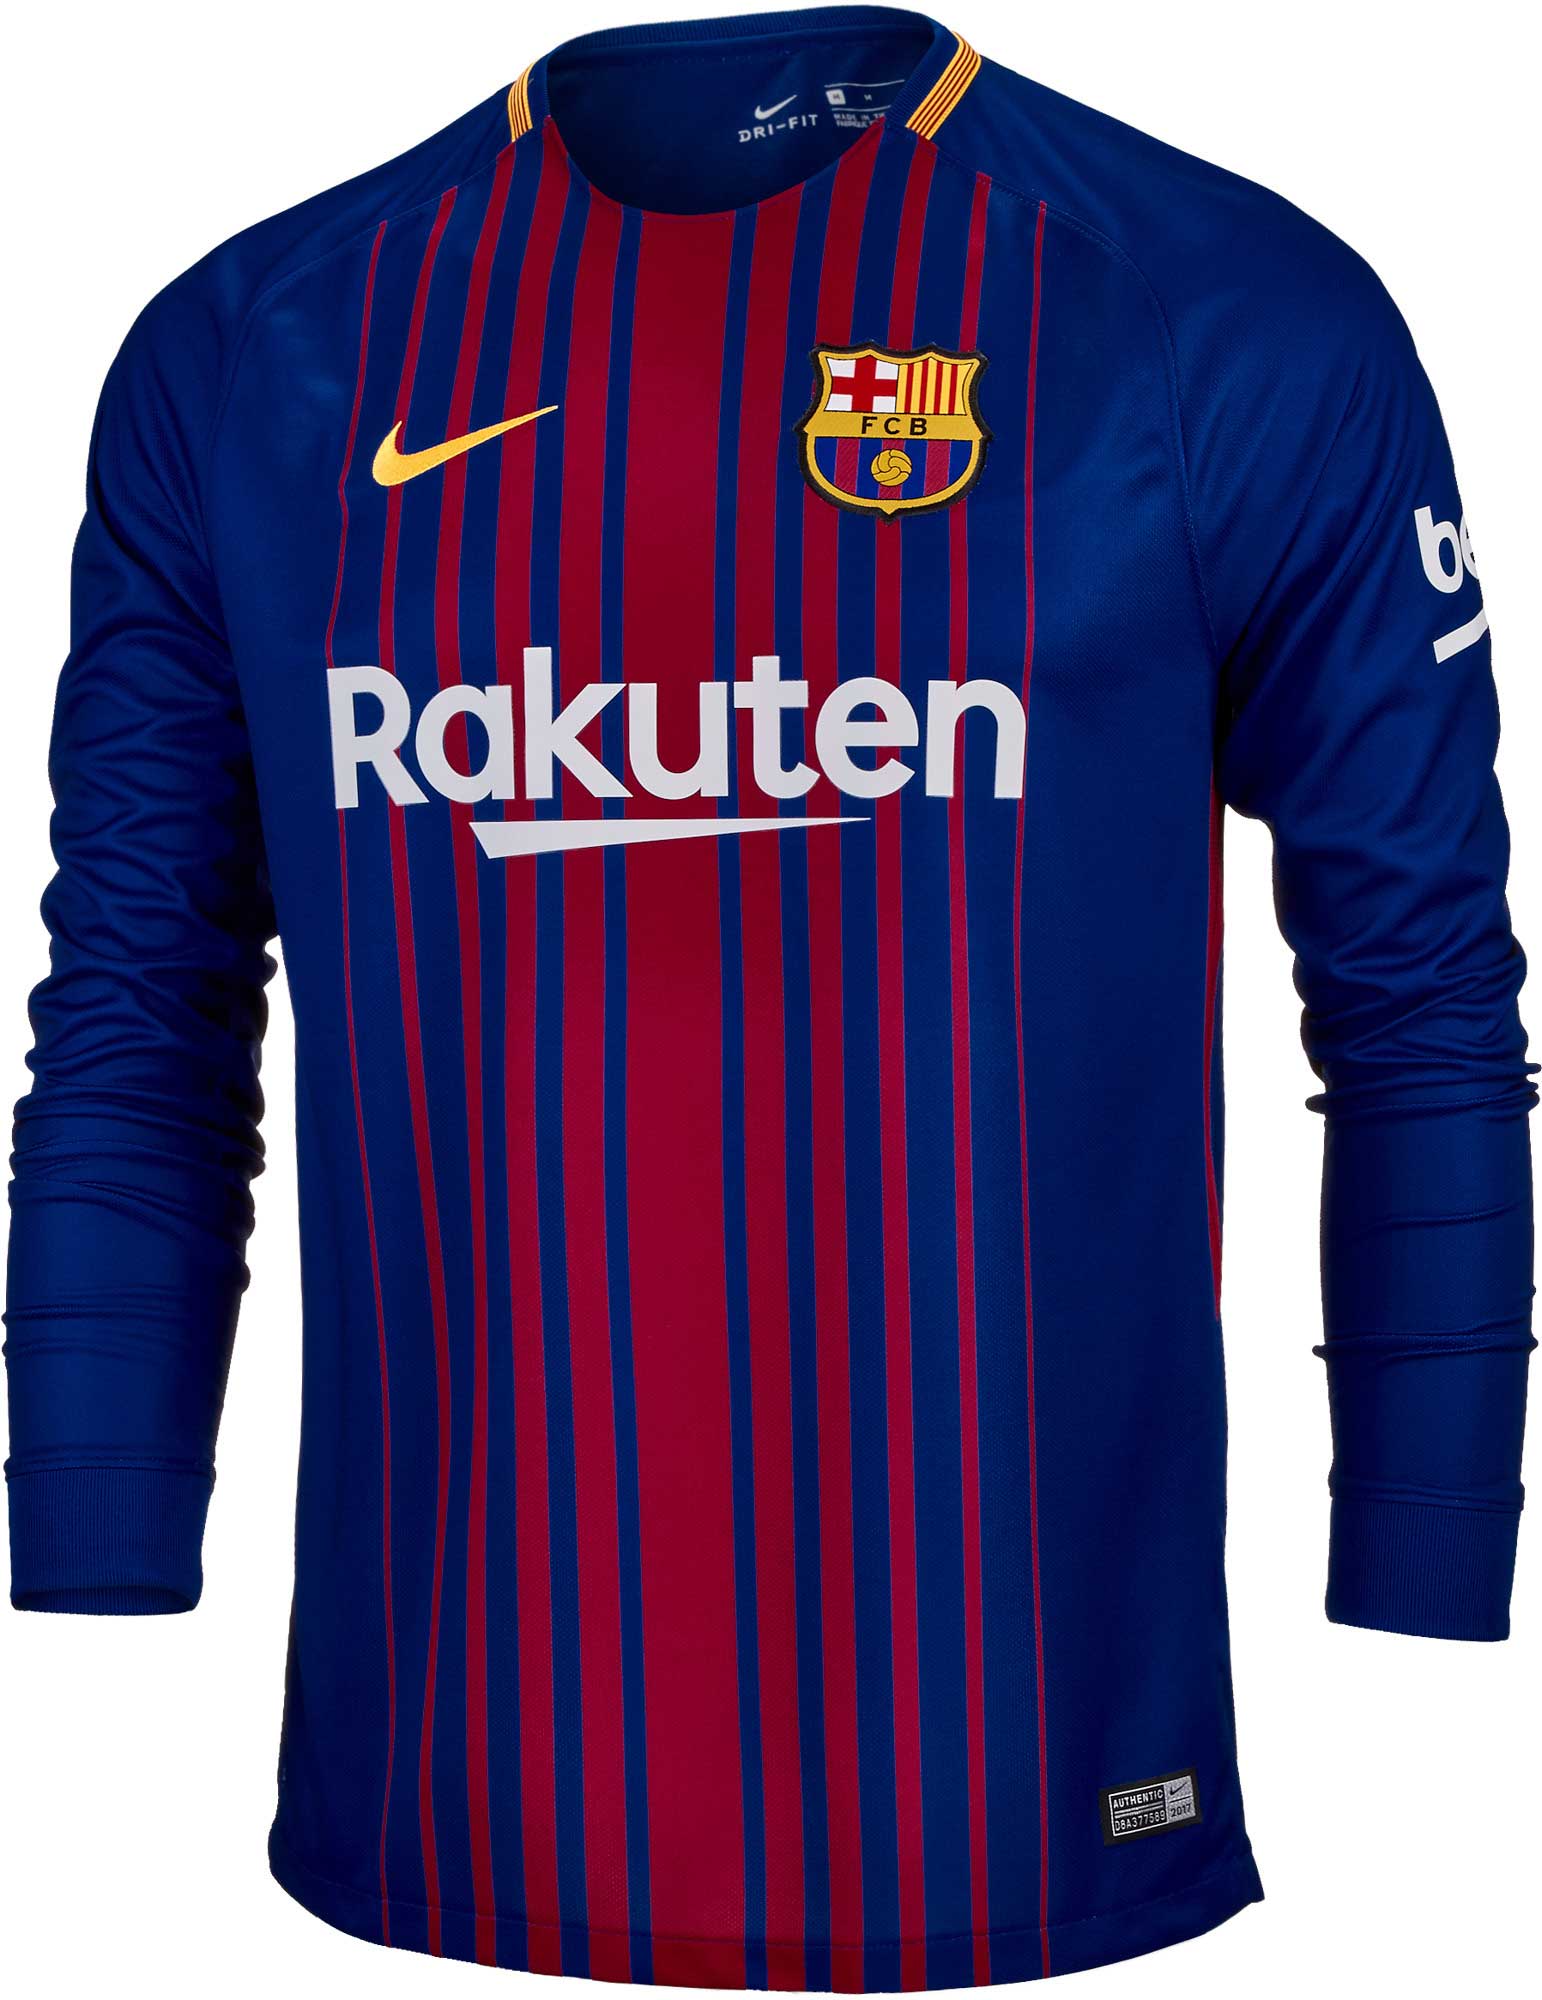 2017/18 Nike Barcelona Home L/S Jersey 